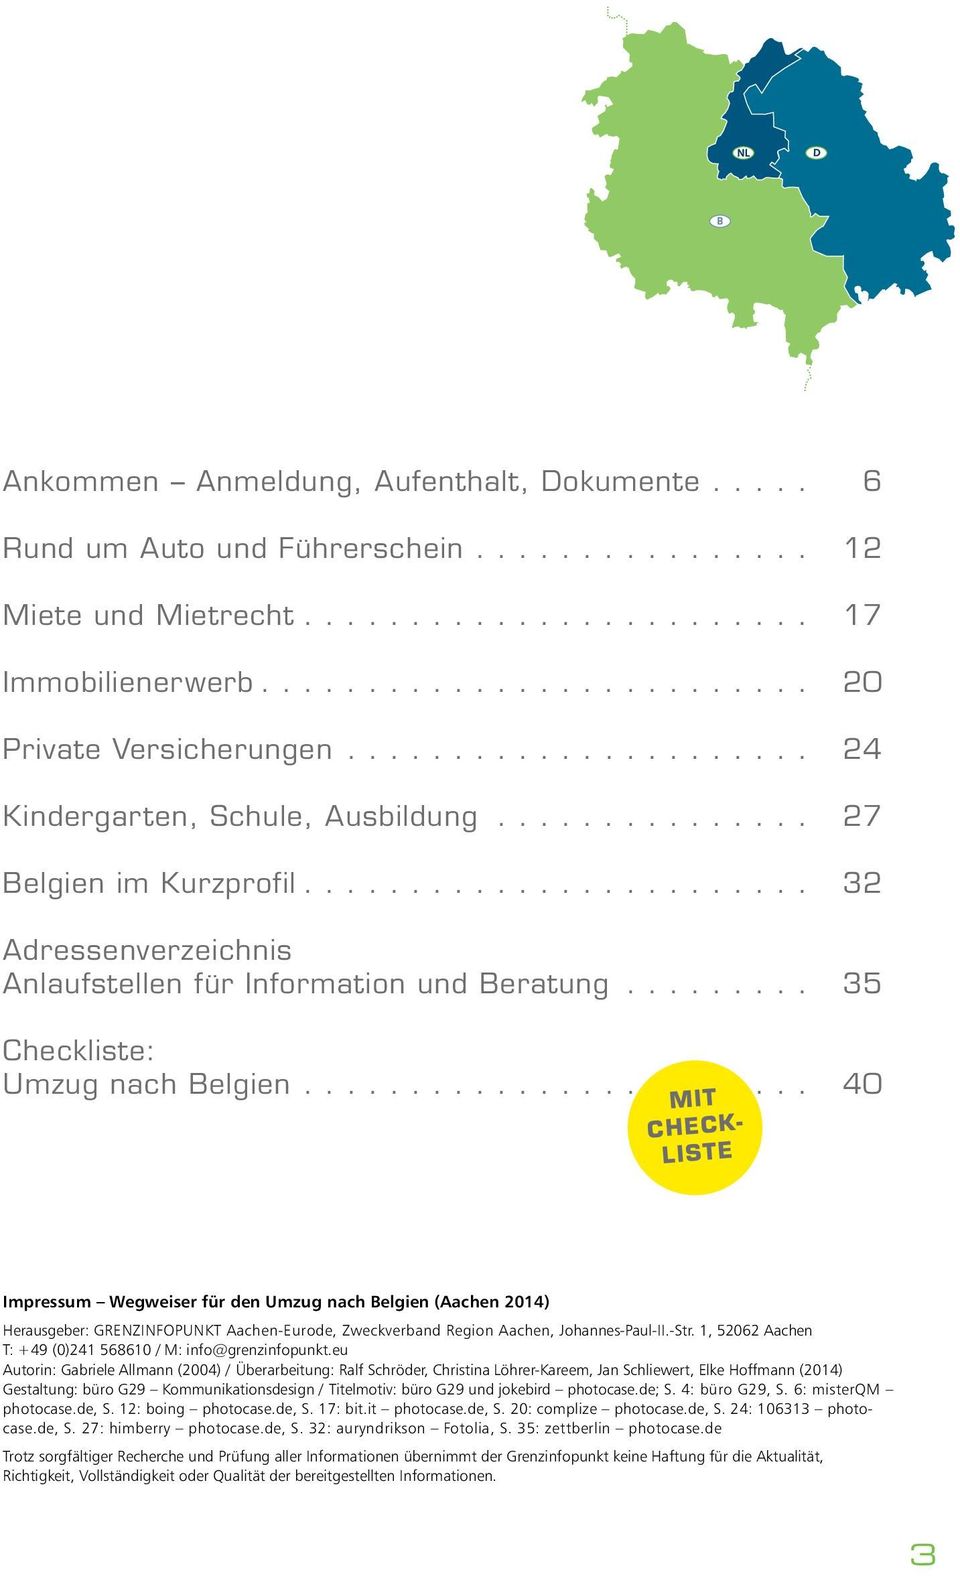 ... 40 mit Checkliste Impressum Wegweiser für den Umzug nach Belgien (Aachen 2014) Herausgeber: GRENZINFOPUNKT Aachen-Eurode, Zweckverband Region Aachen, Johannes-Paul-II.-Str.